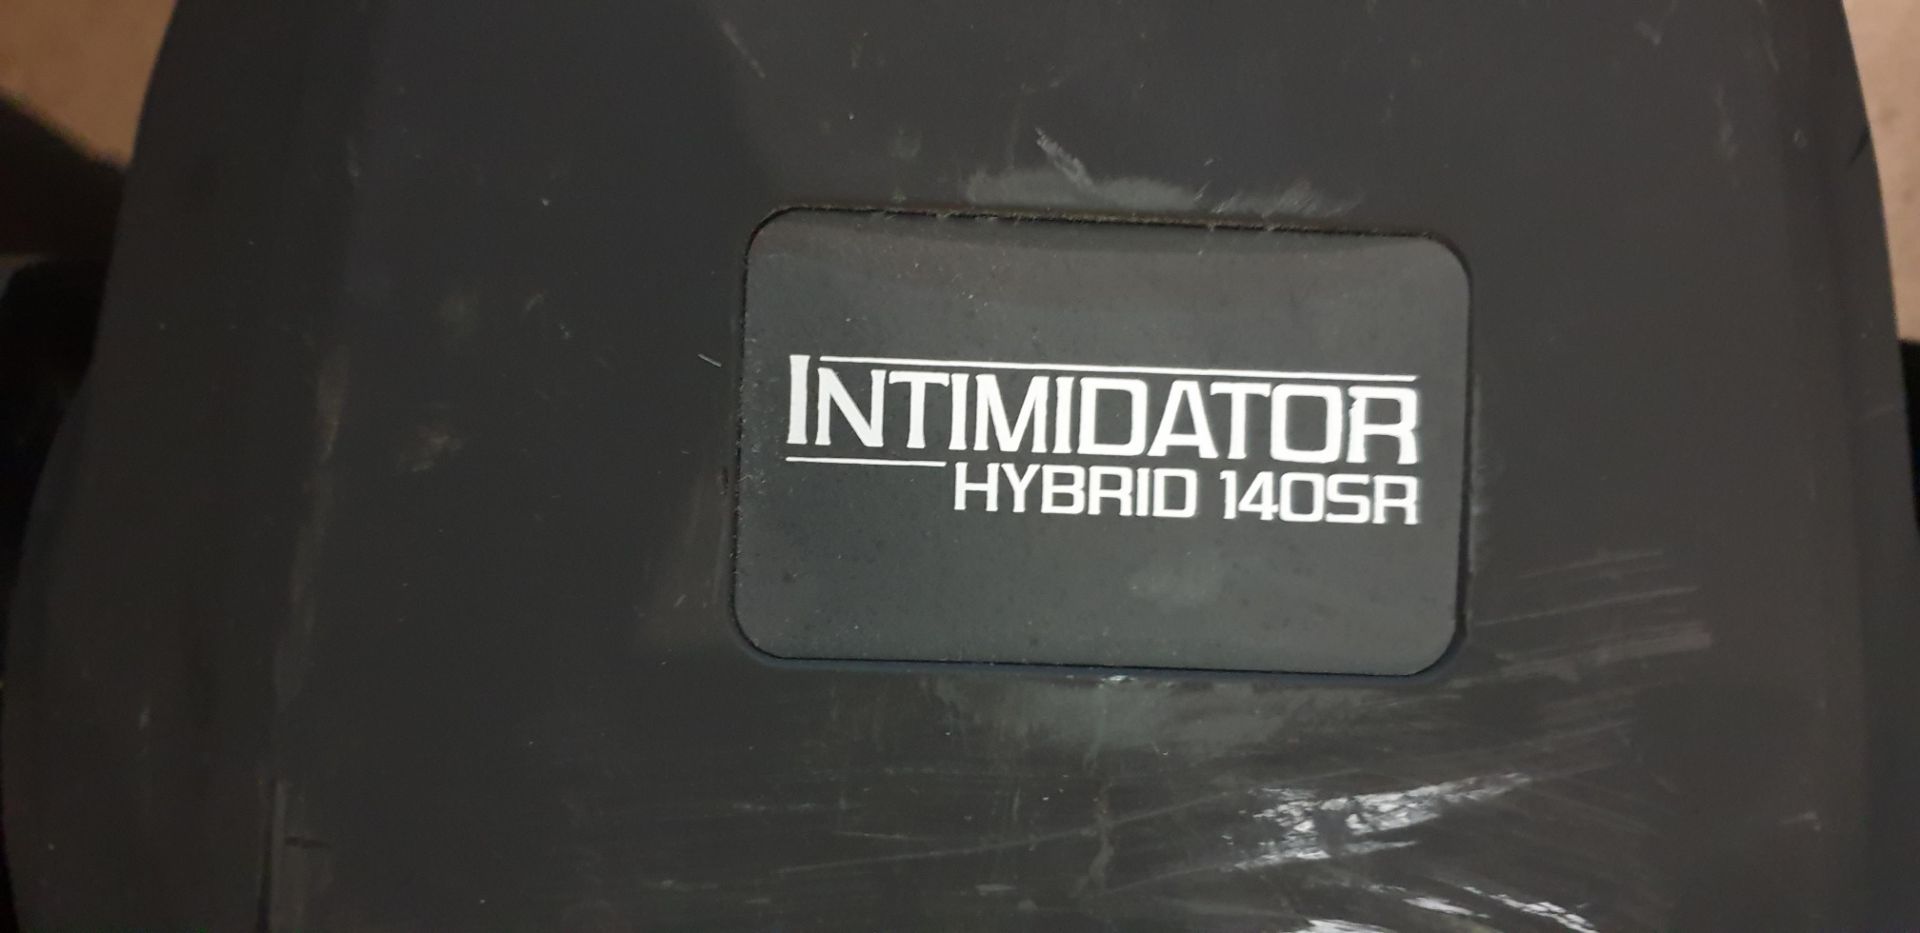 1 ; Chauvet DJ Intimidator Hybrid 140SR Lighting - Image 3 of 3